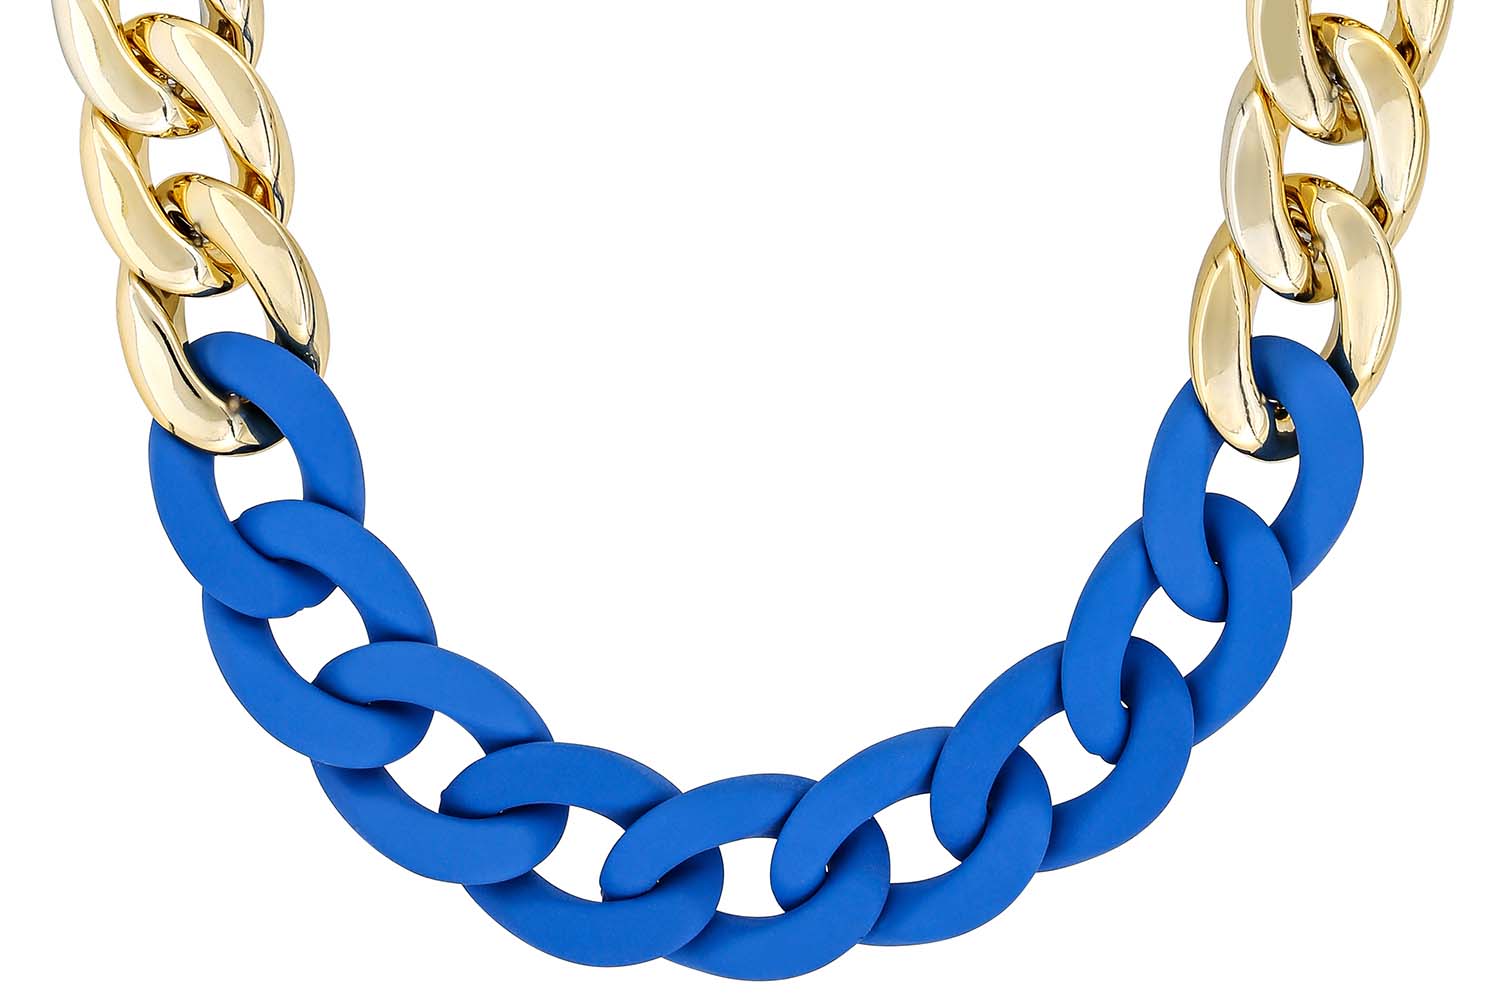 DAMEN Accessoires Modeschmuckset Blau NoName Blaue irisierende Perlenkette Blau/Golden Einheitlich Rabatt 40 % 